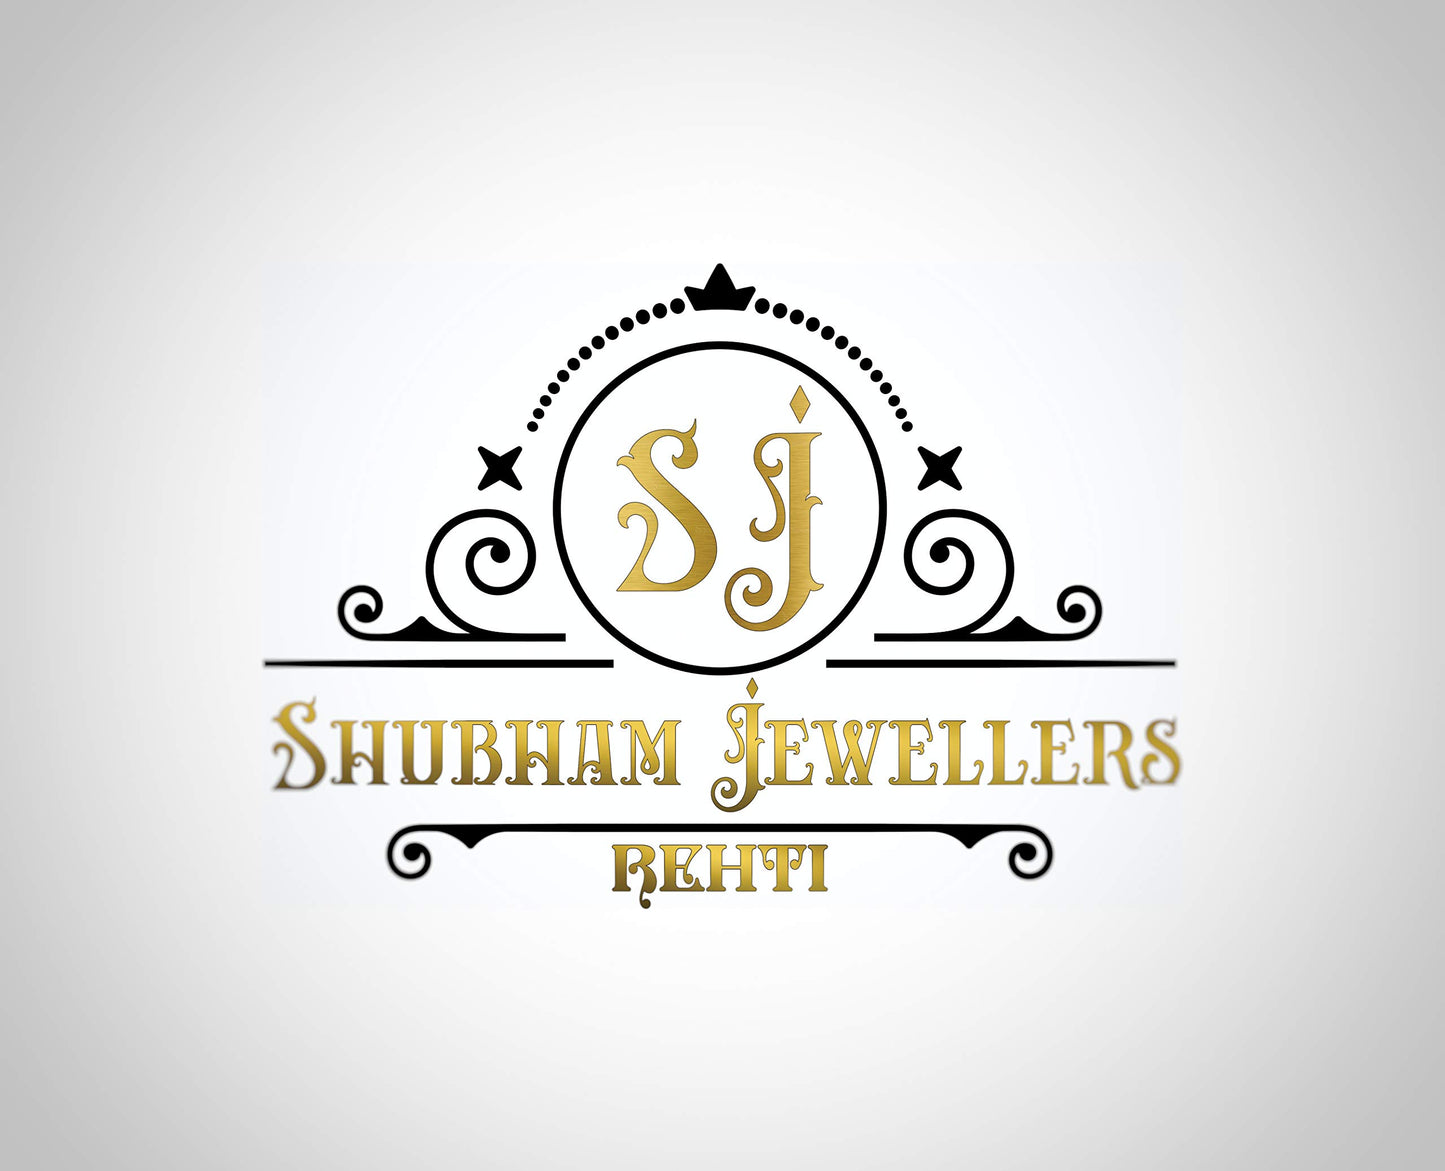 SJ SHUBHAM JEWELLERS Rehti 925-92.5 Pure Sterling Silver Oxidised Pendant For Men,Women,Children,Boys and Girls - JewelYaari By Shubham Jewellers